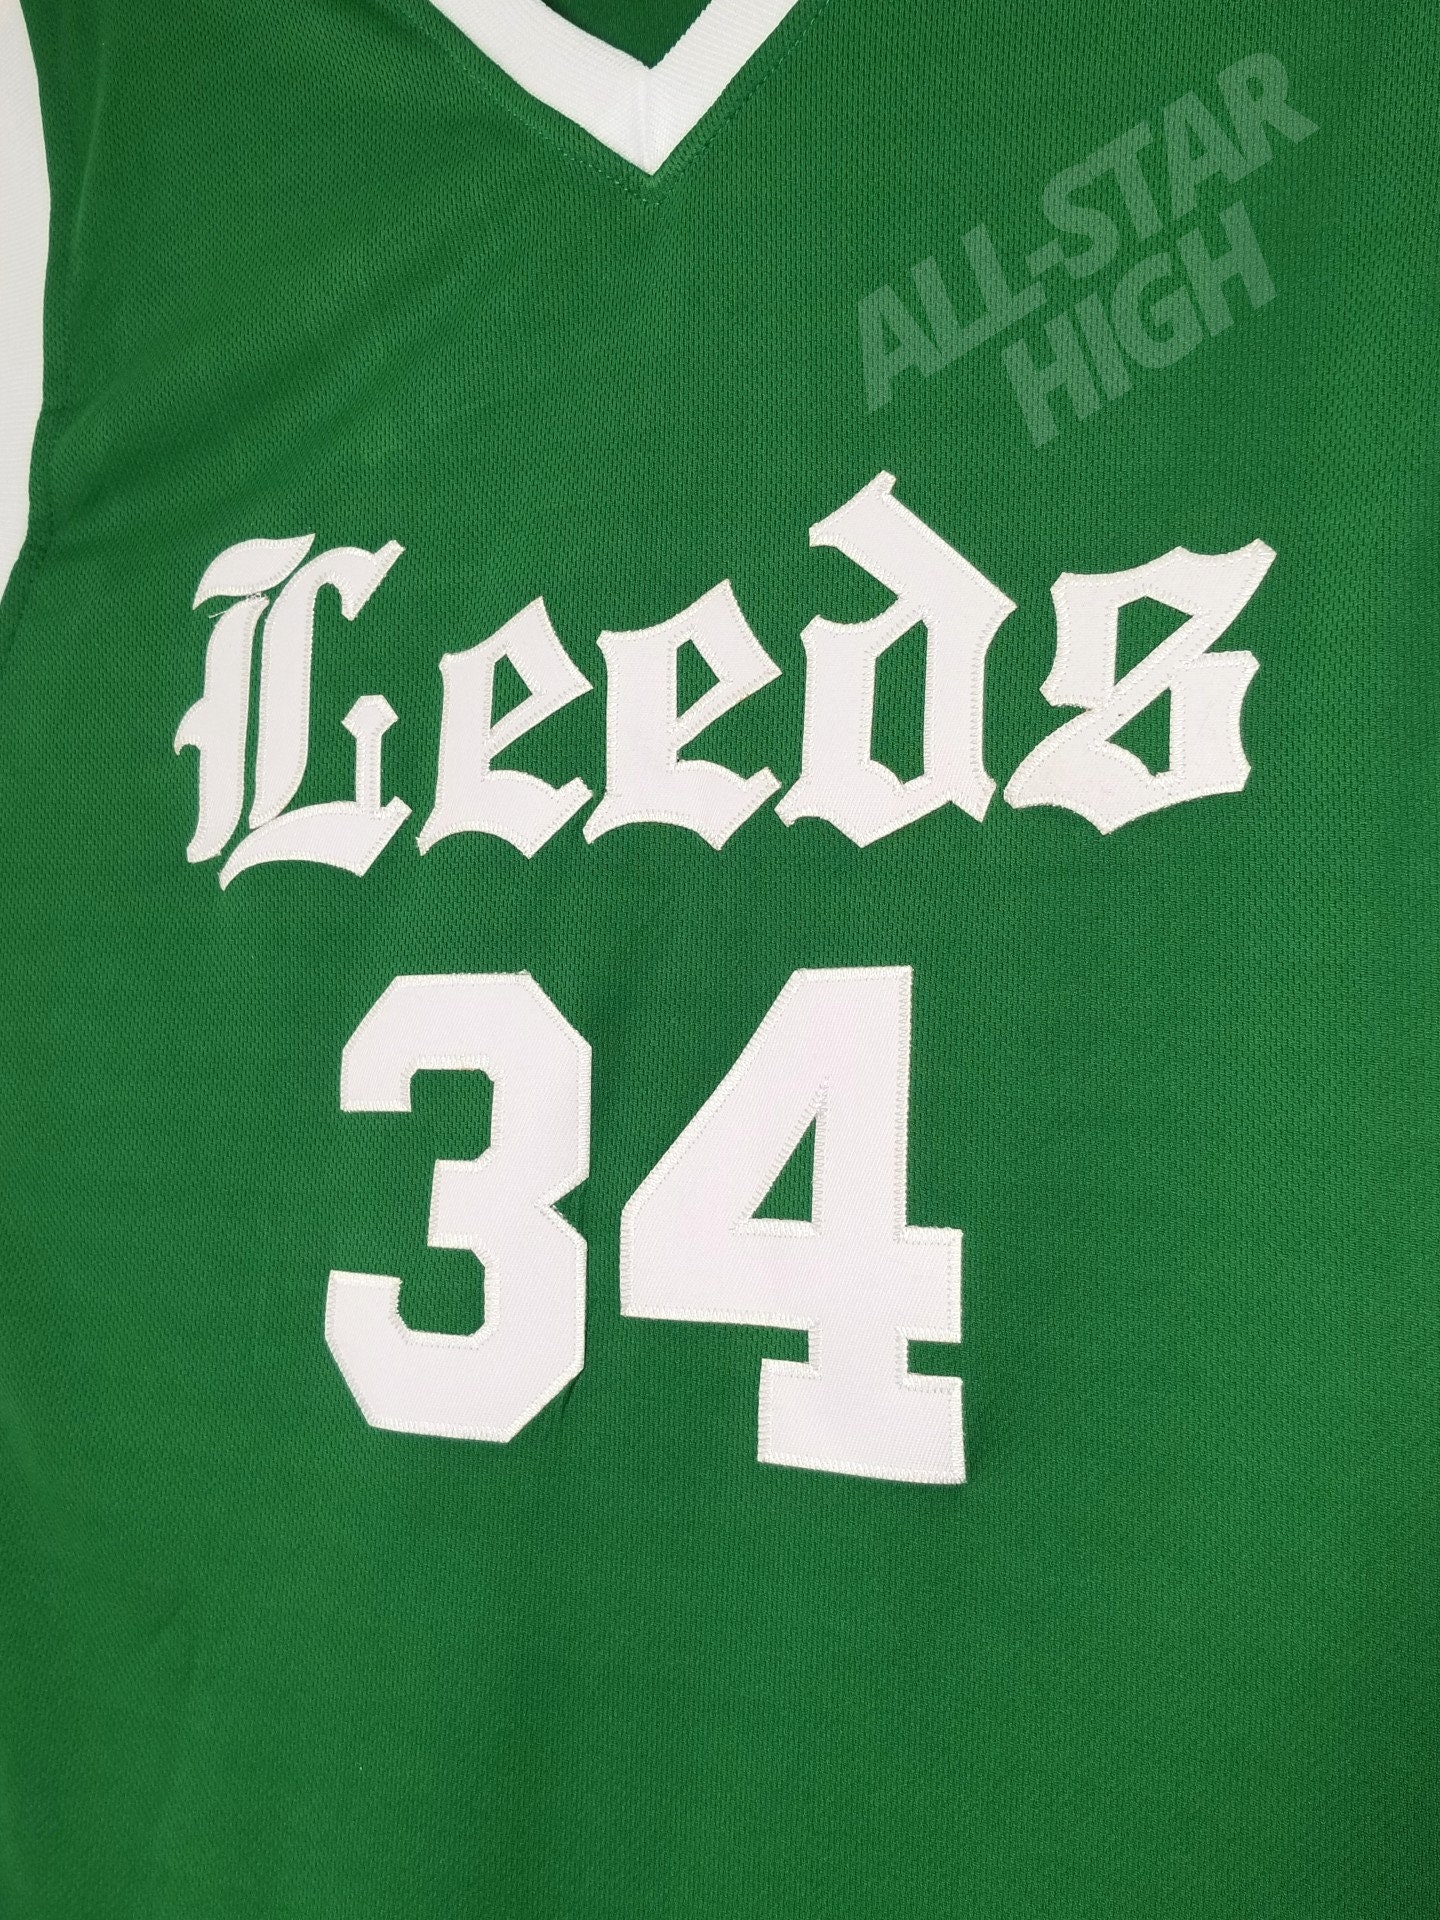 AllStarHigh Charles Barkley High School Basketball Jersey - Leeds | Throwback Custom Retro Sports Fan Apparel Jersey